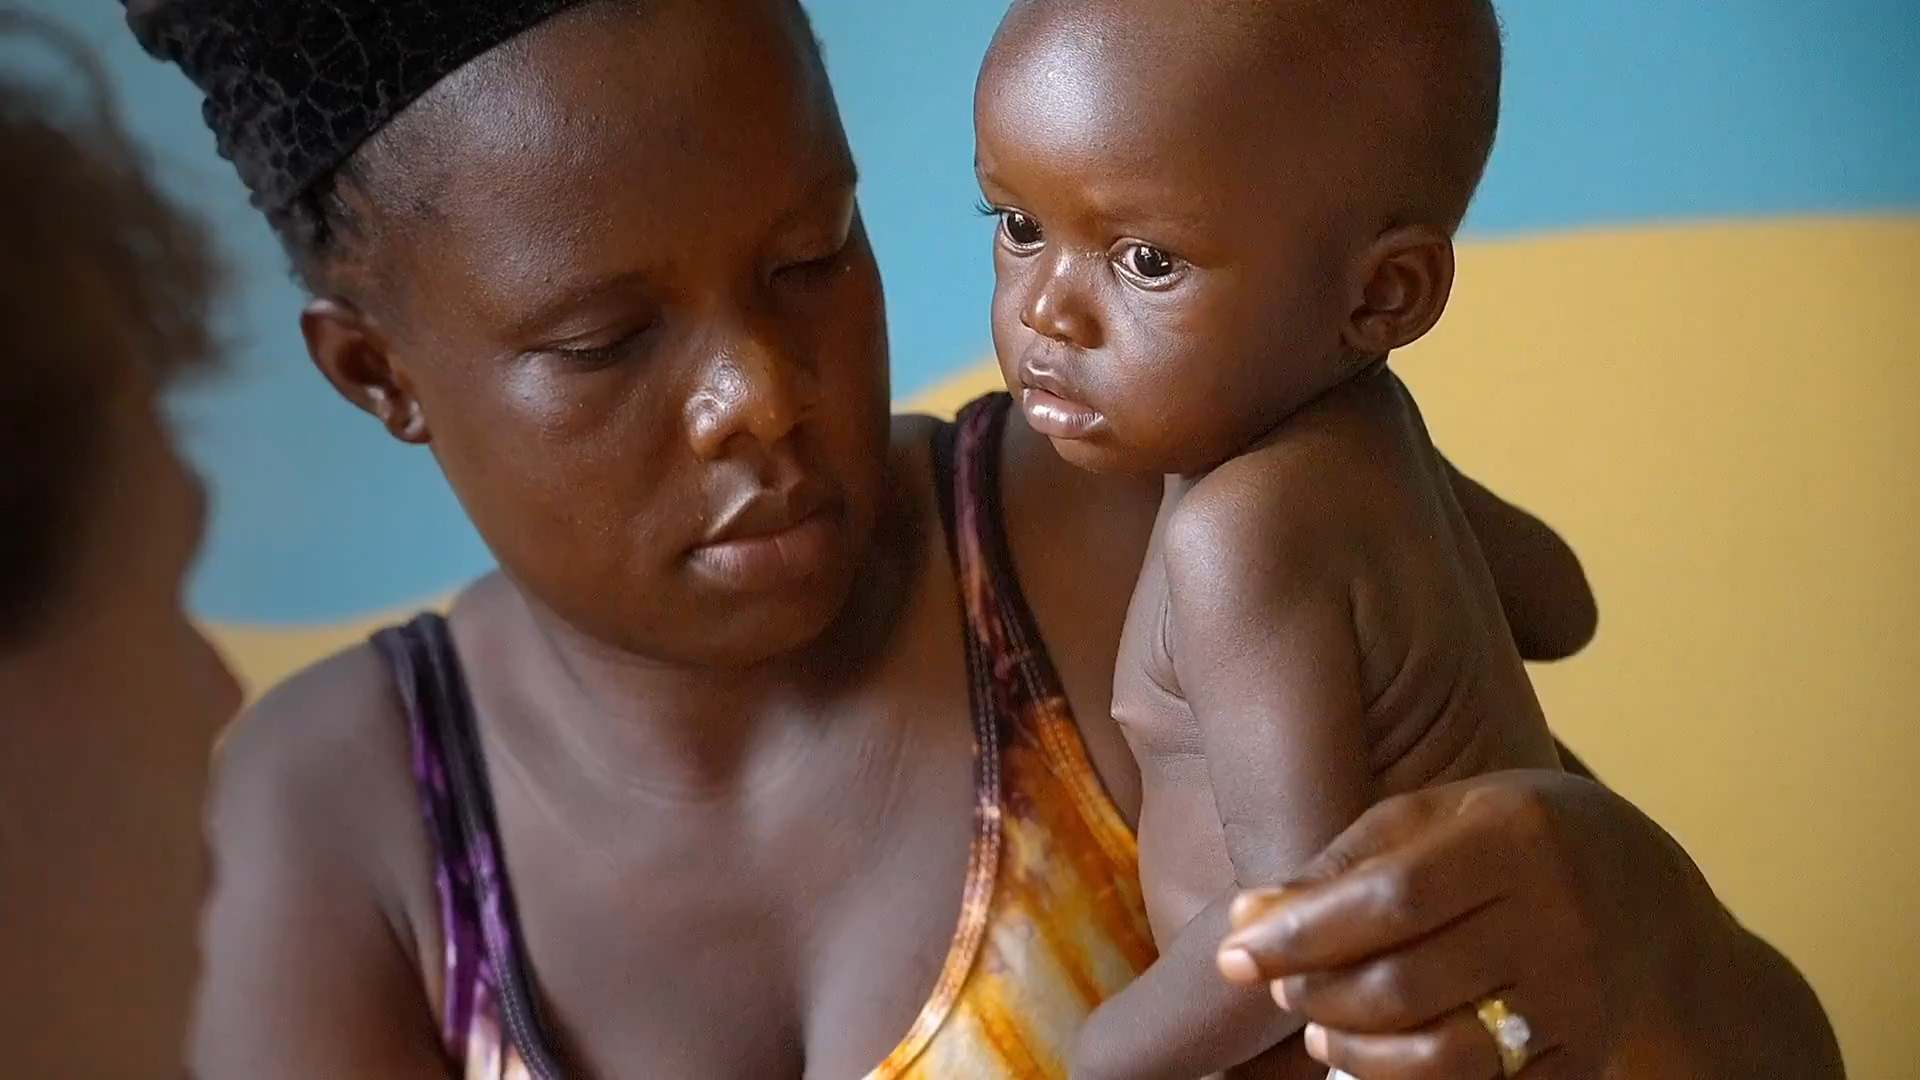 Providing Maternal Healthcare in Liberia